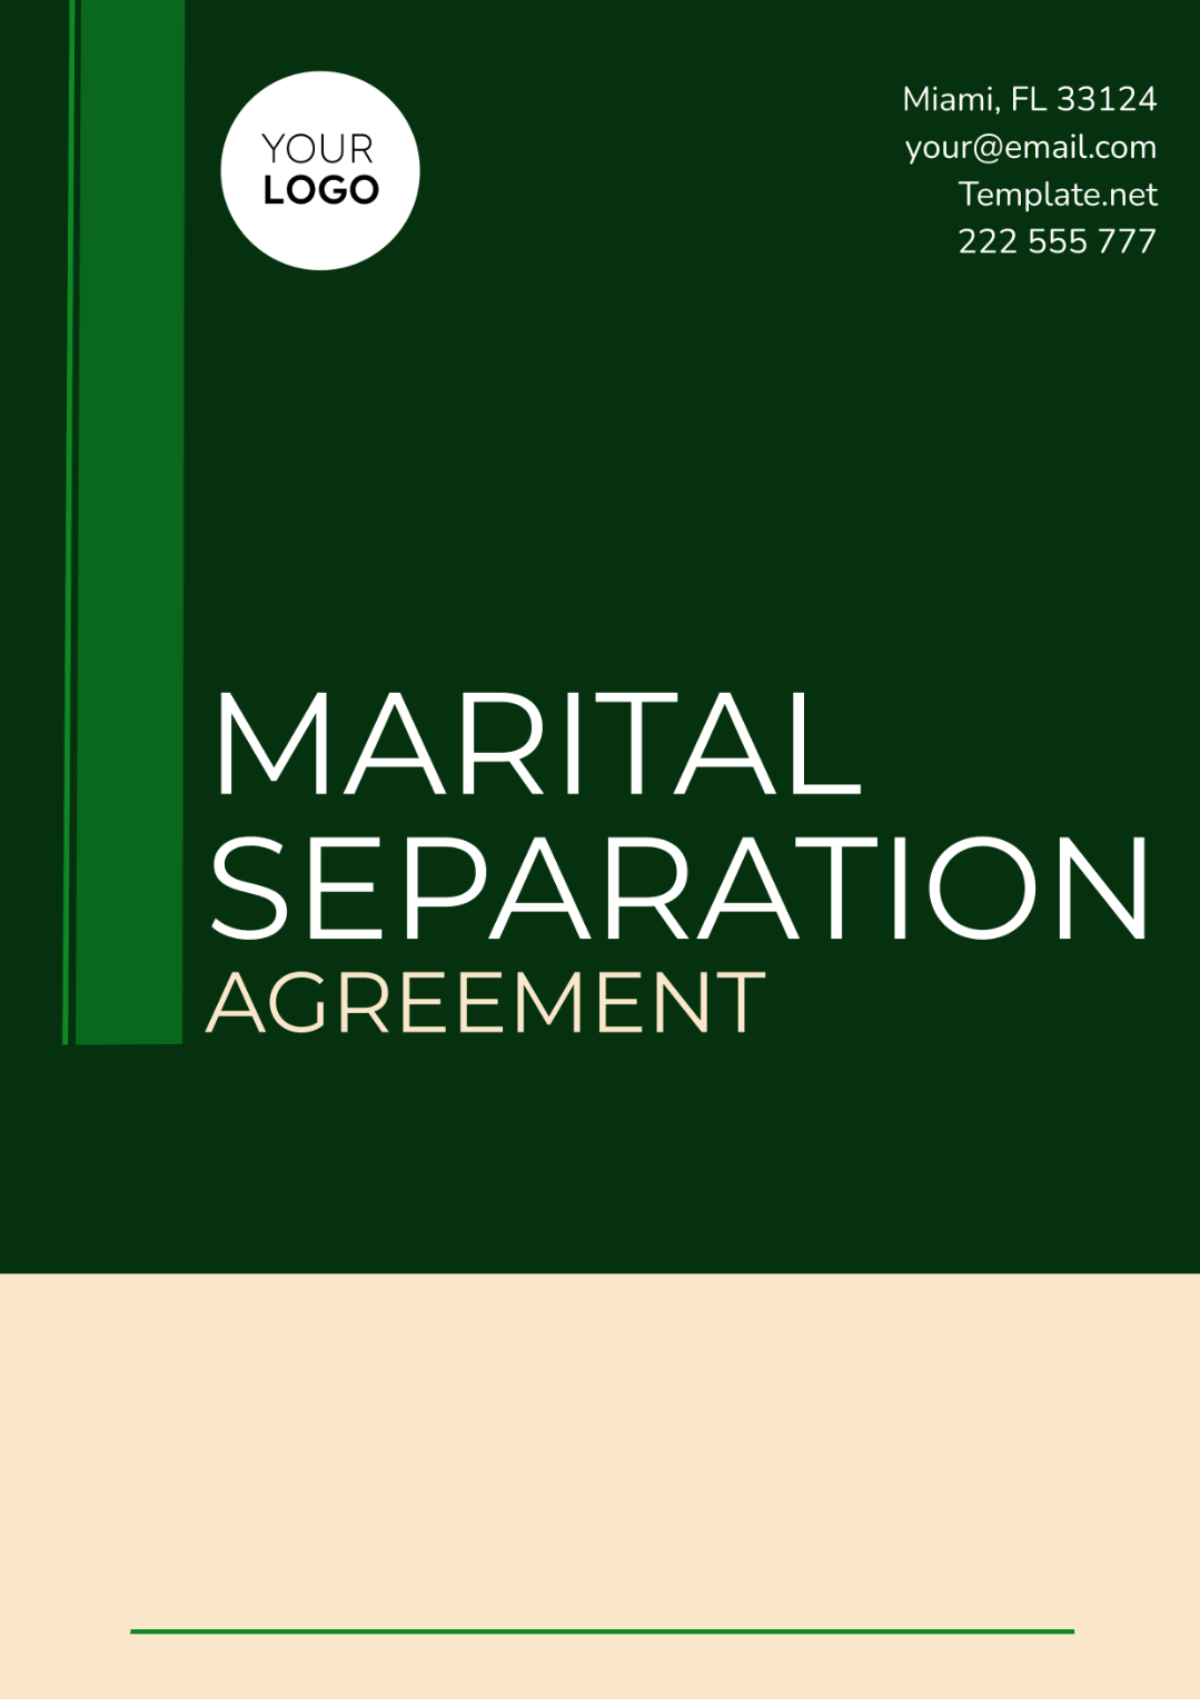 Free Marital Separation Agreement Template